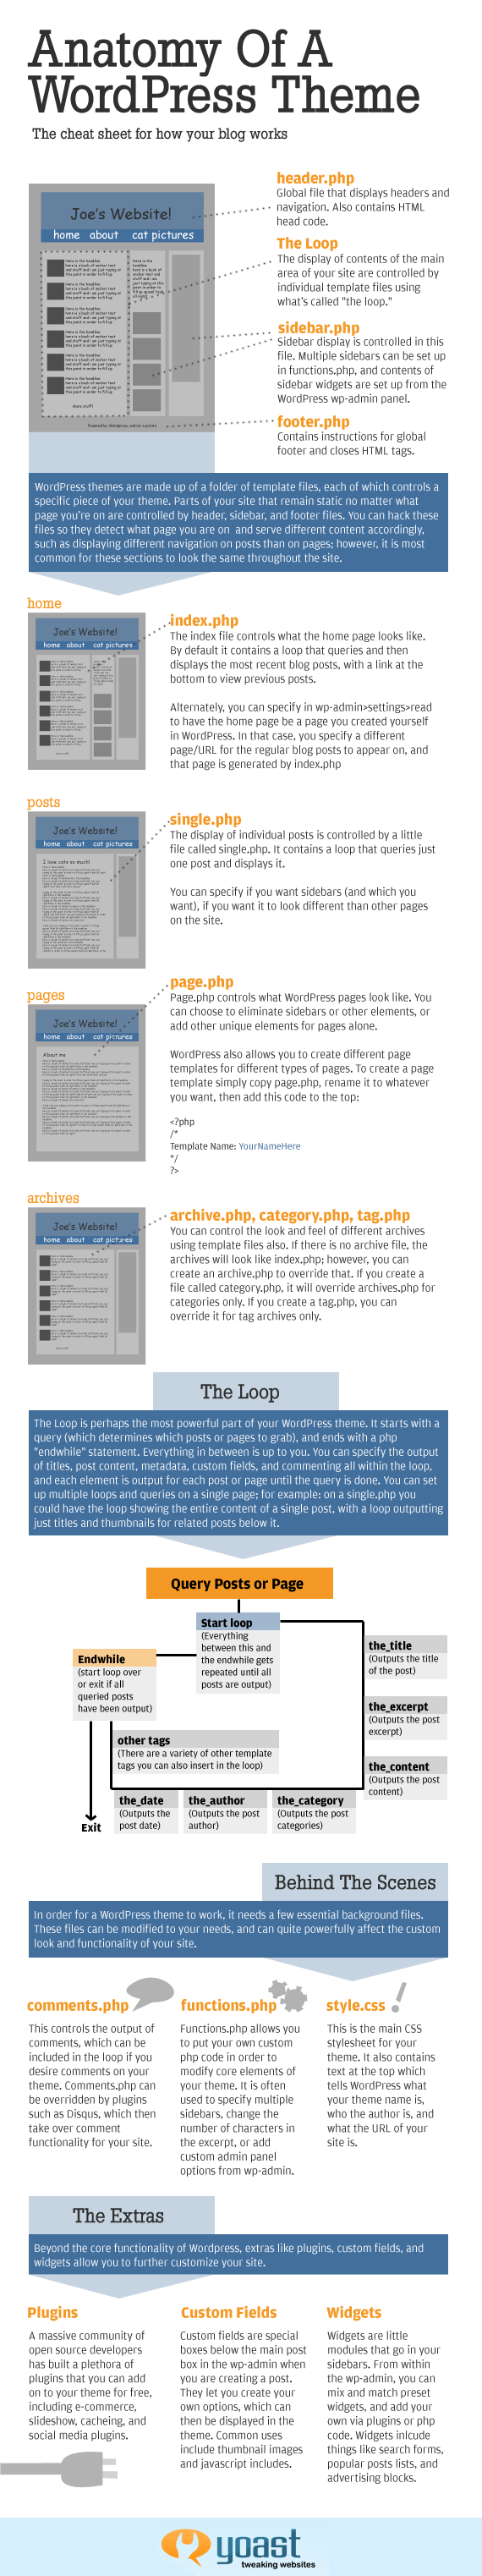 WordPress Infographic - Anatomy of a WordPress Theme